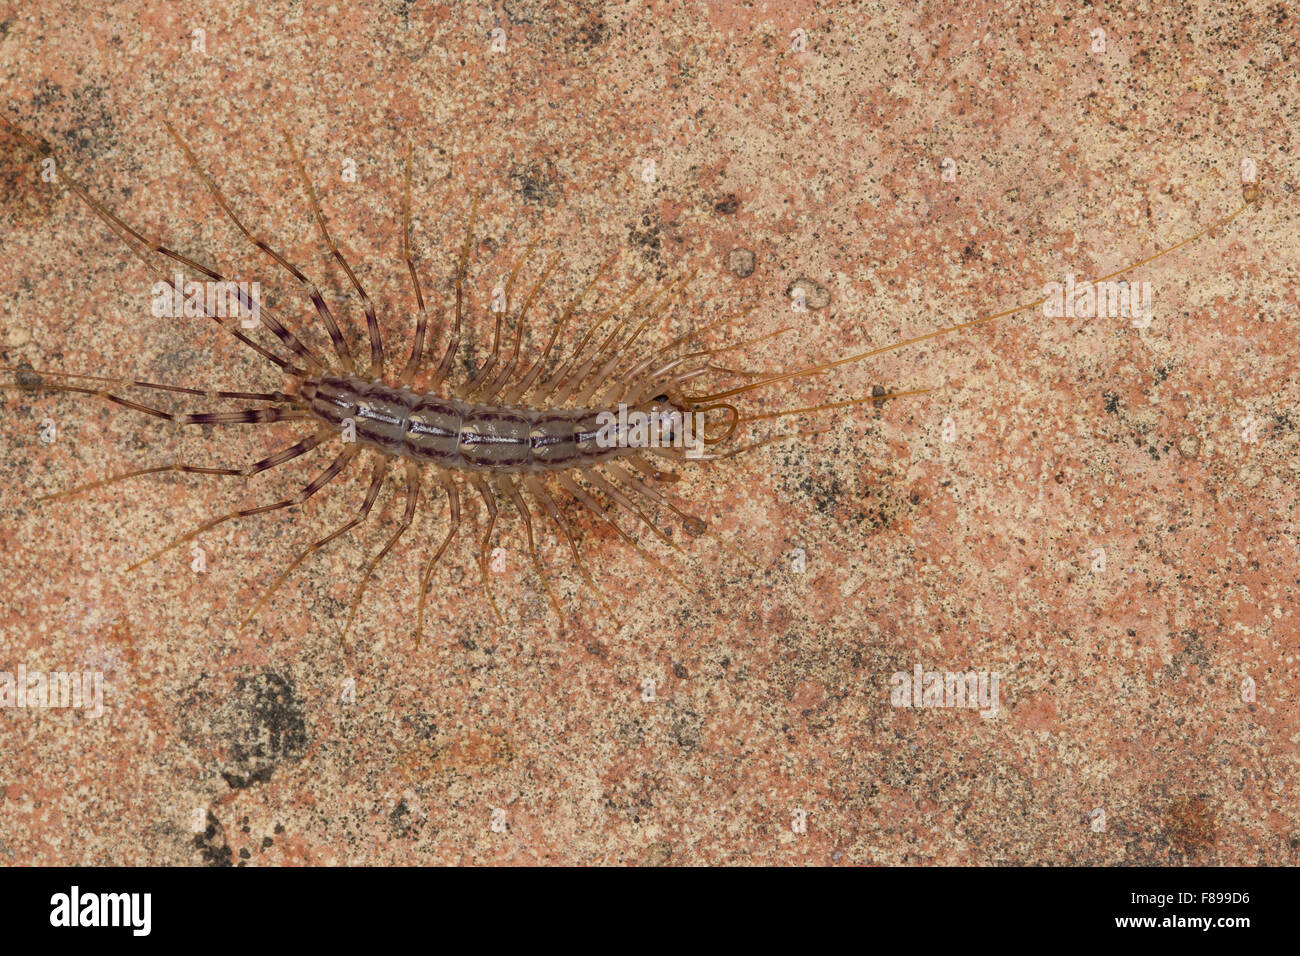 House centipede, Spinnenläufer, Spinnenassel, Spinnen-Läufer, Spinnen-Assel, Scutigera coleoptrata, Chilopoda Stock Photo